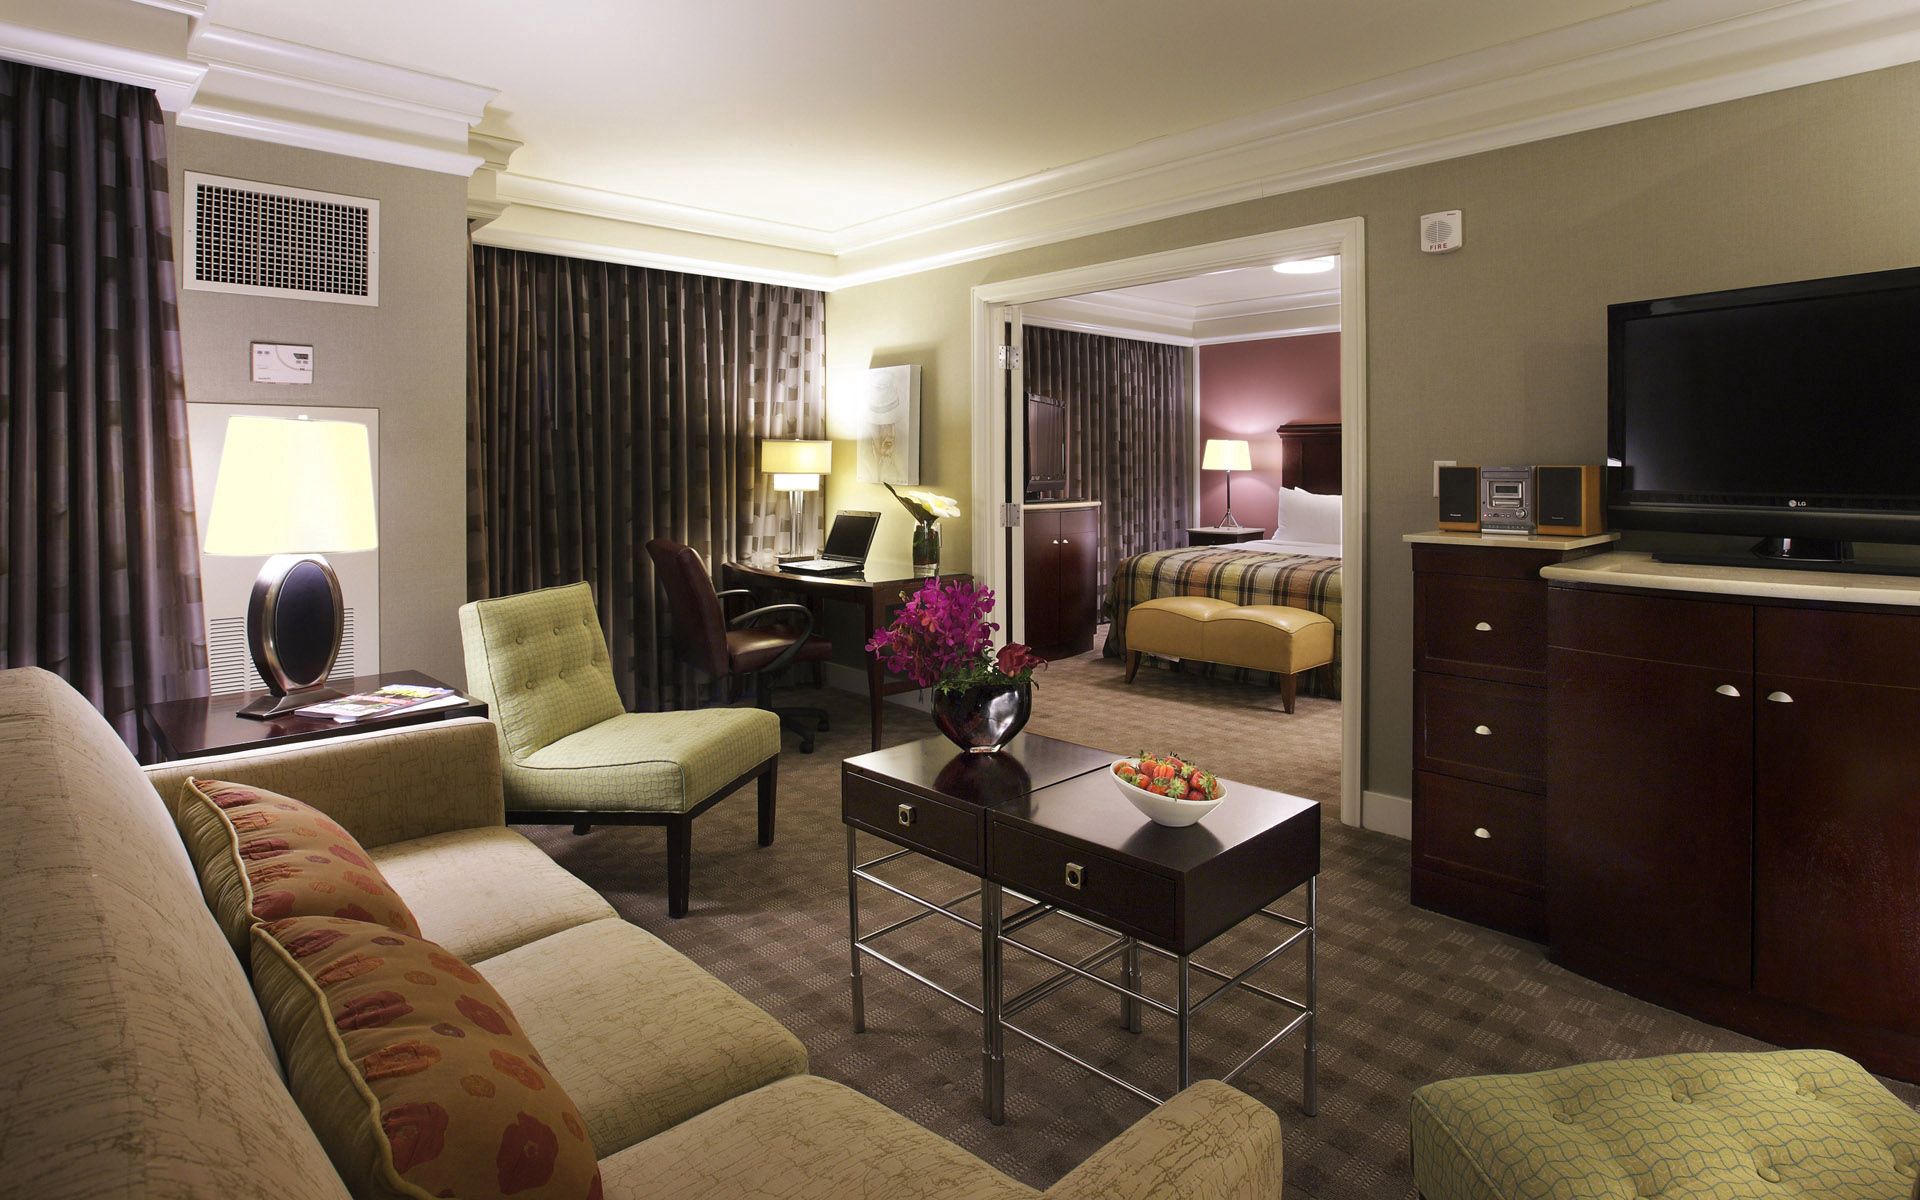 hotel, miscellanea, miscellaneous, furniture, modern, up to date, coziness, comfort, sleeping, bedroom